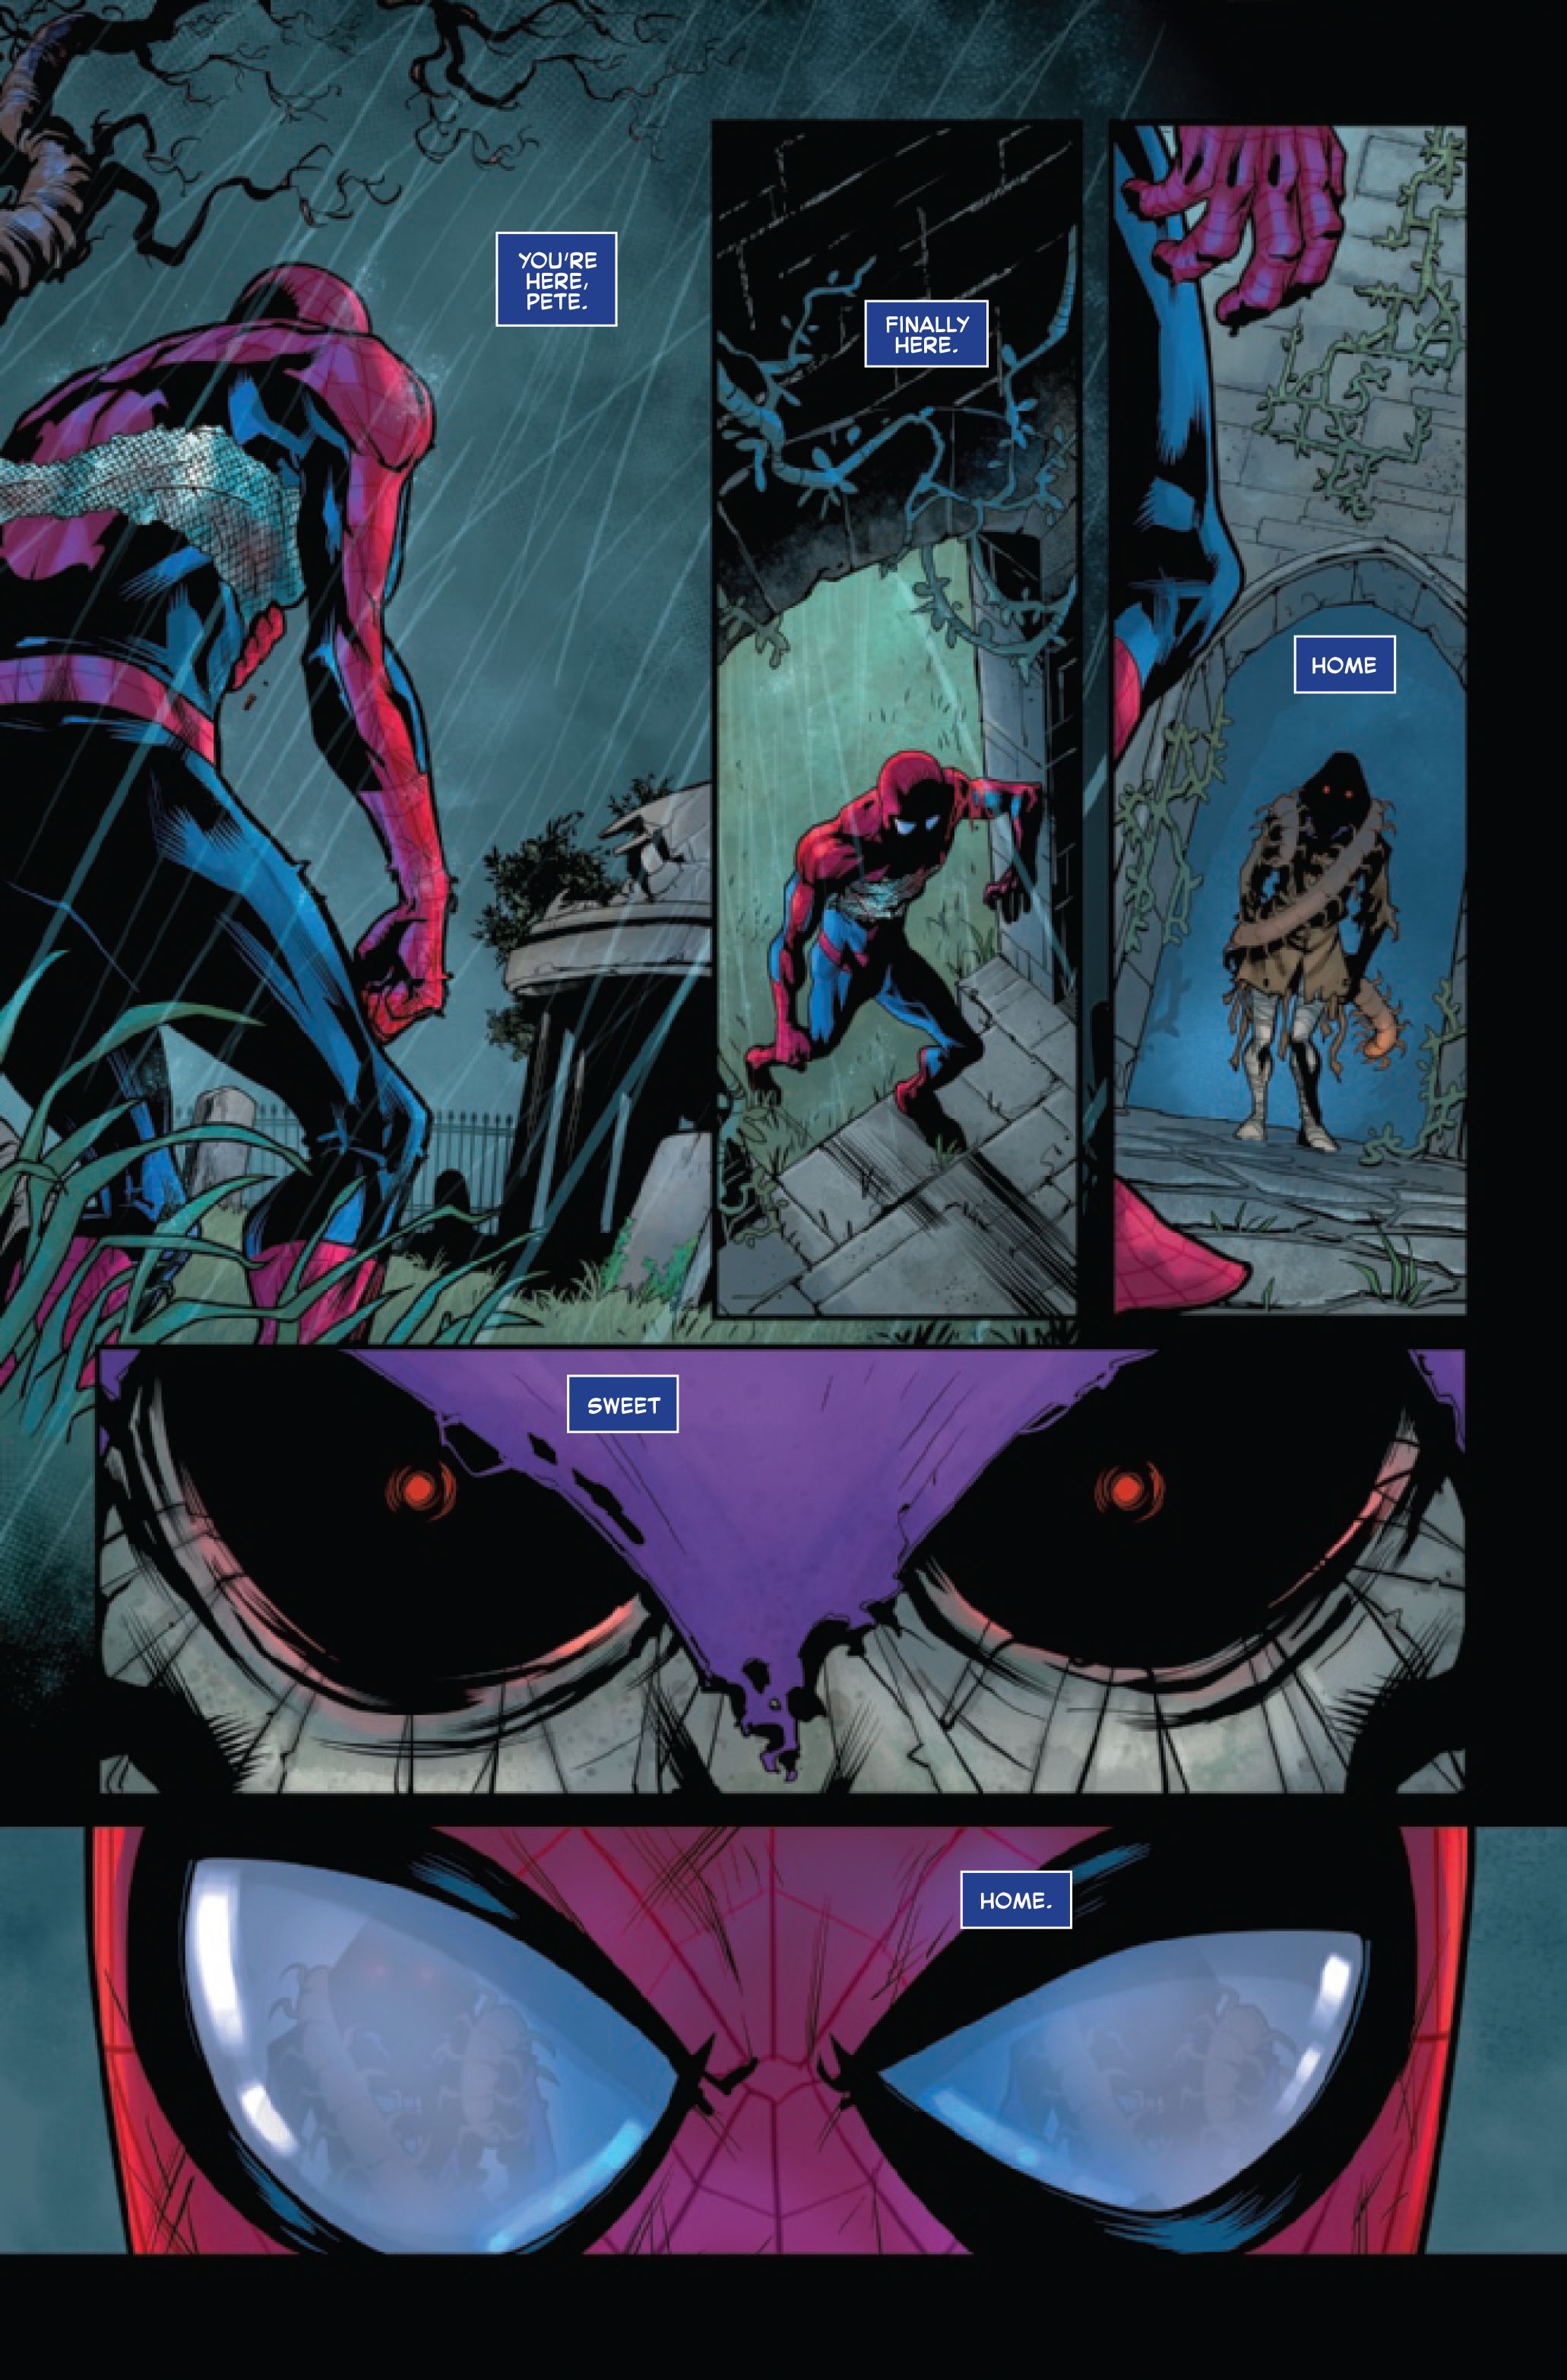 Page 2 of Amazing Spider-Man #73, by Nick Spencer, Zé Carlos, Carlos Gómez and Marcelo Ferreira.